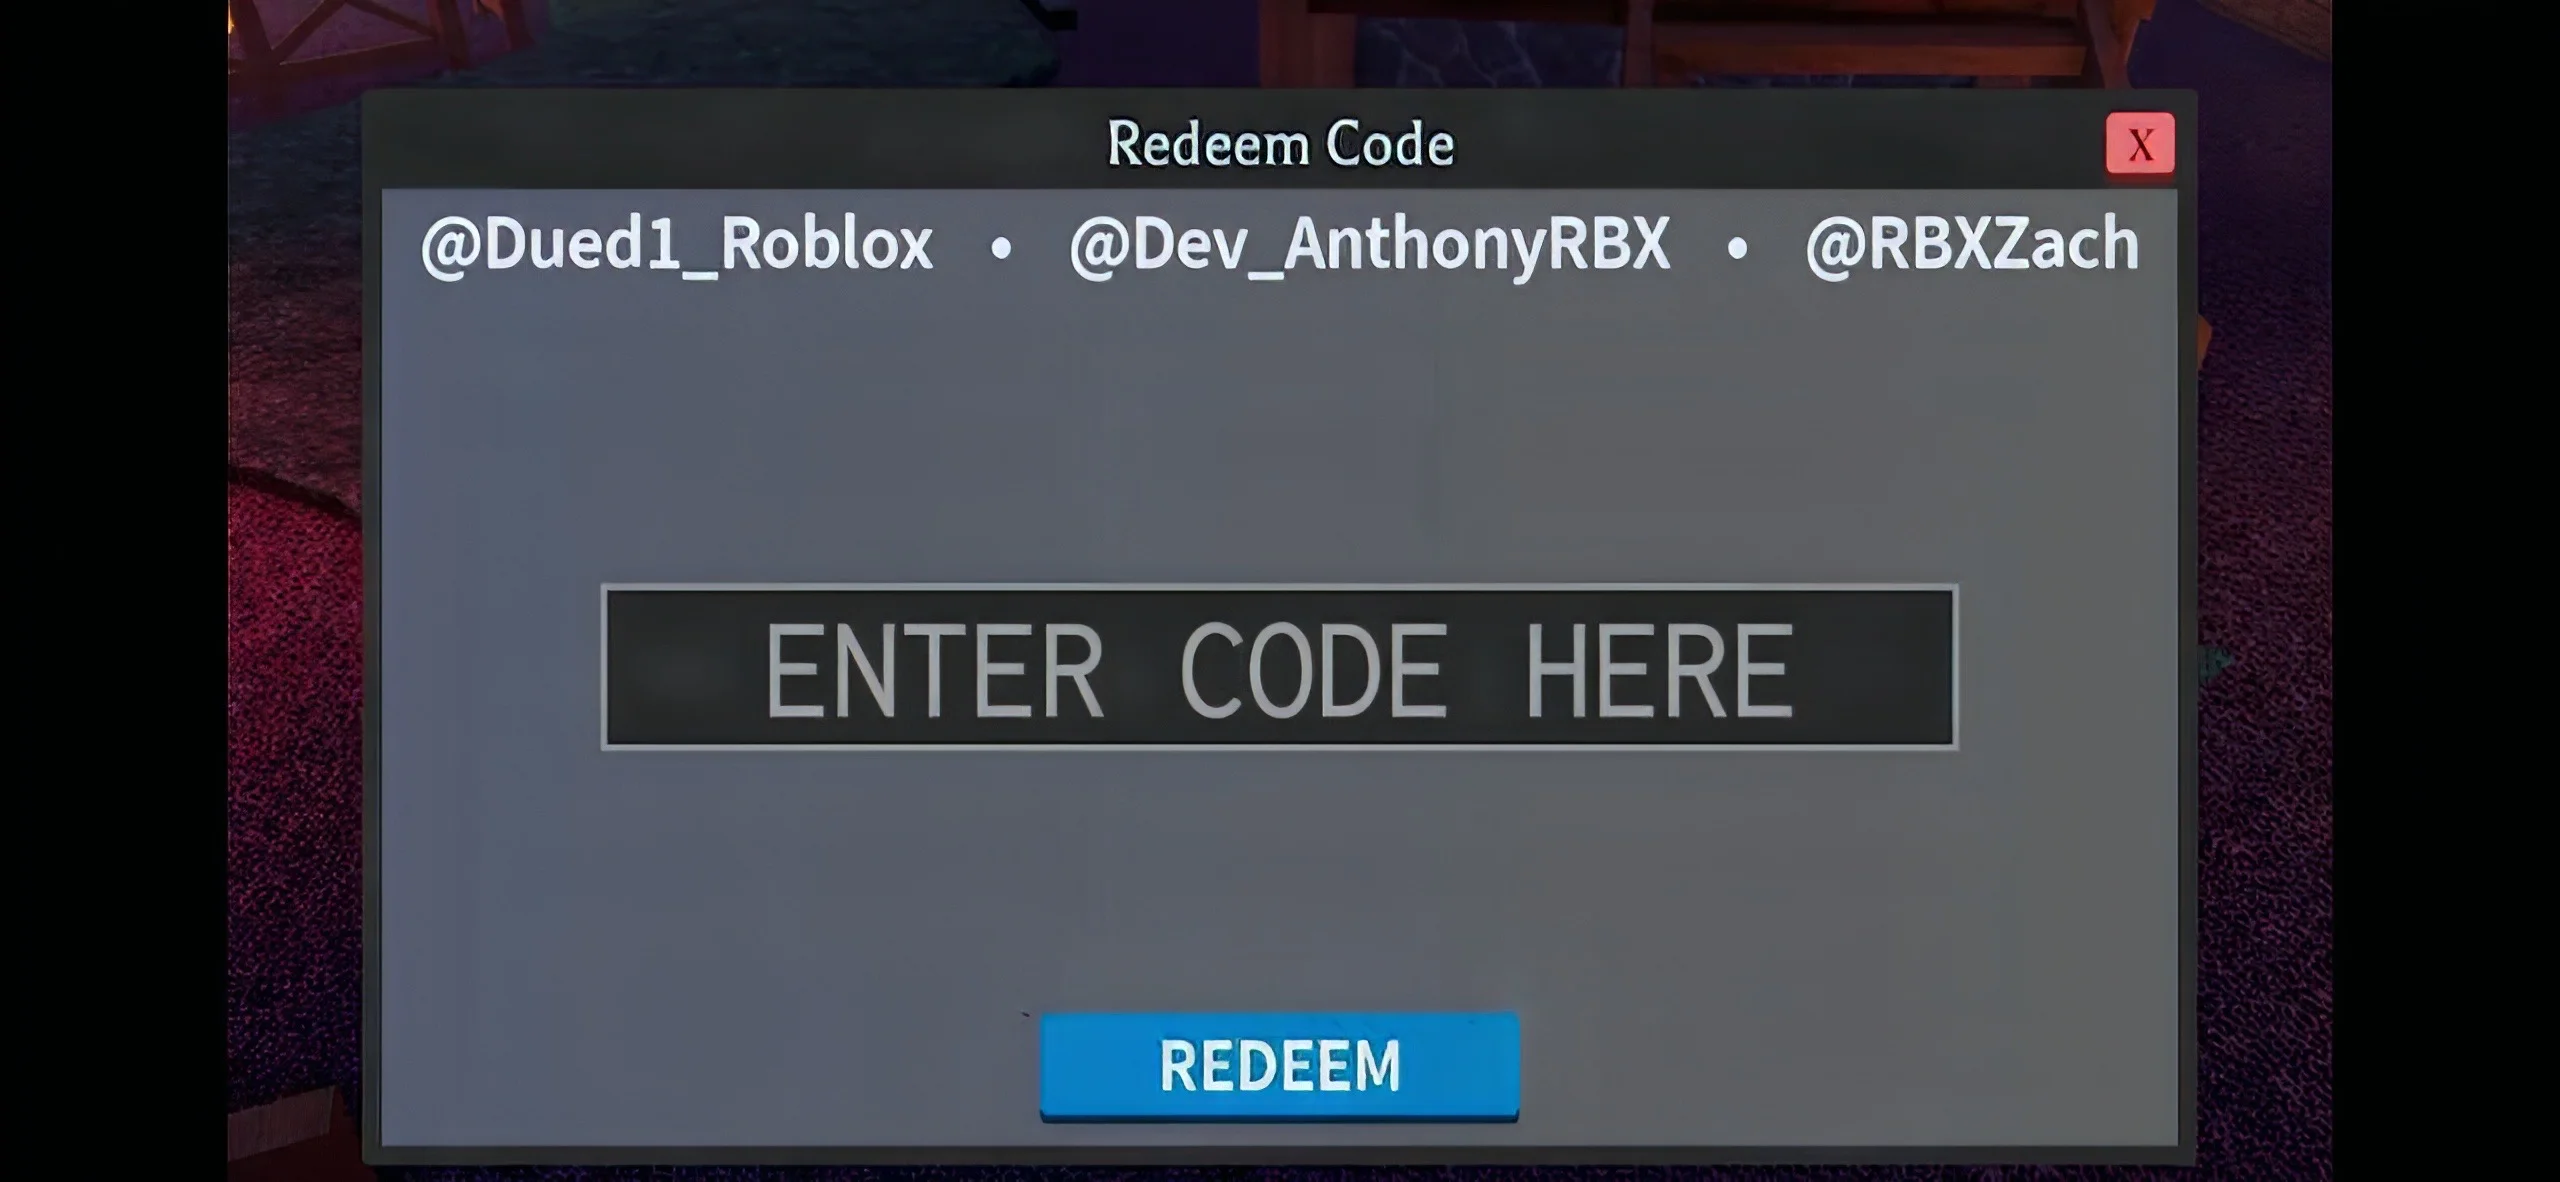 Roblox Survive The Killer Codes (December 2023)